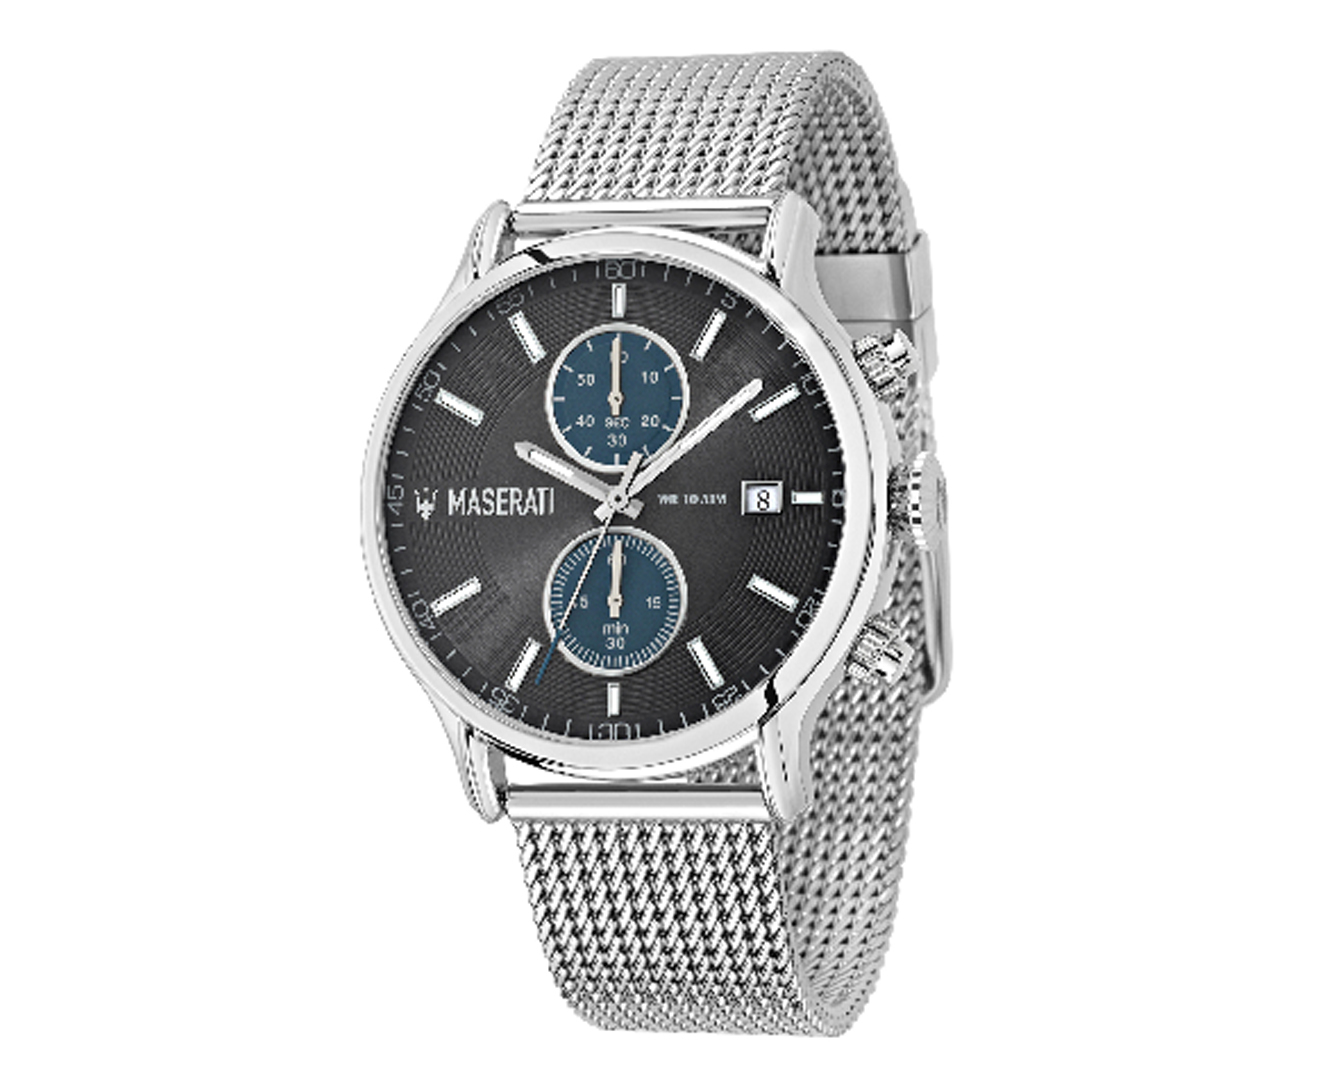 Maserati Men's 43mm Epoca Stainless Steel Watch - Grey/Silver | Www ...